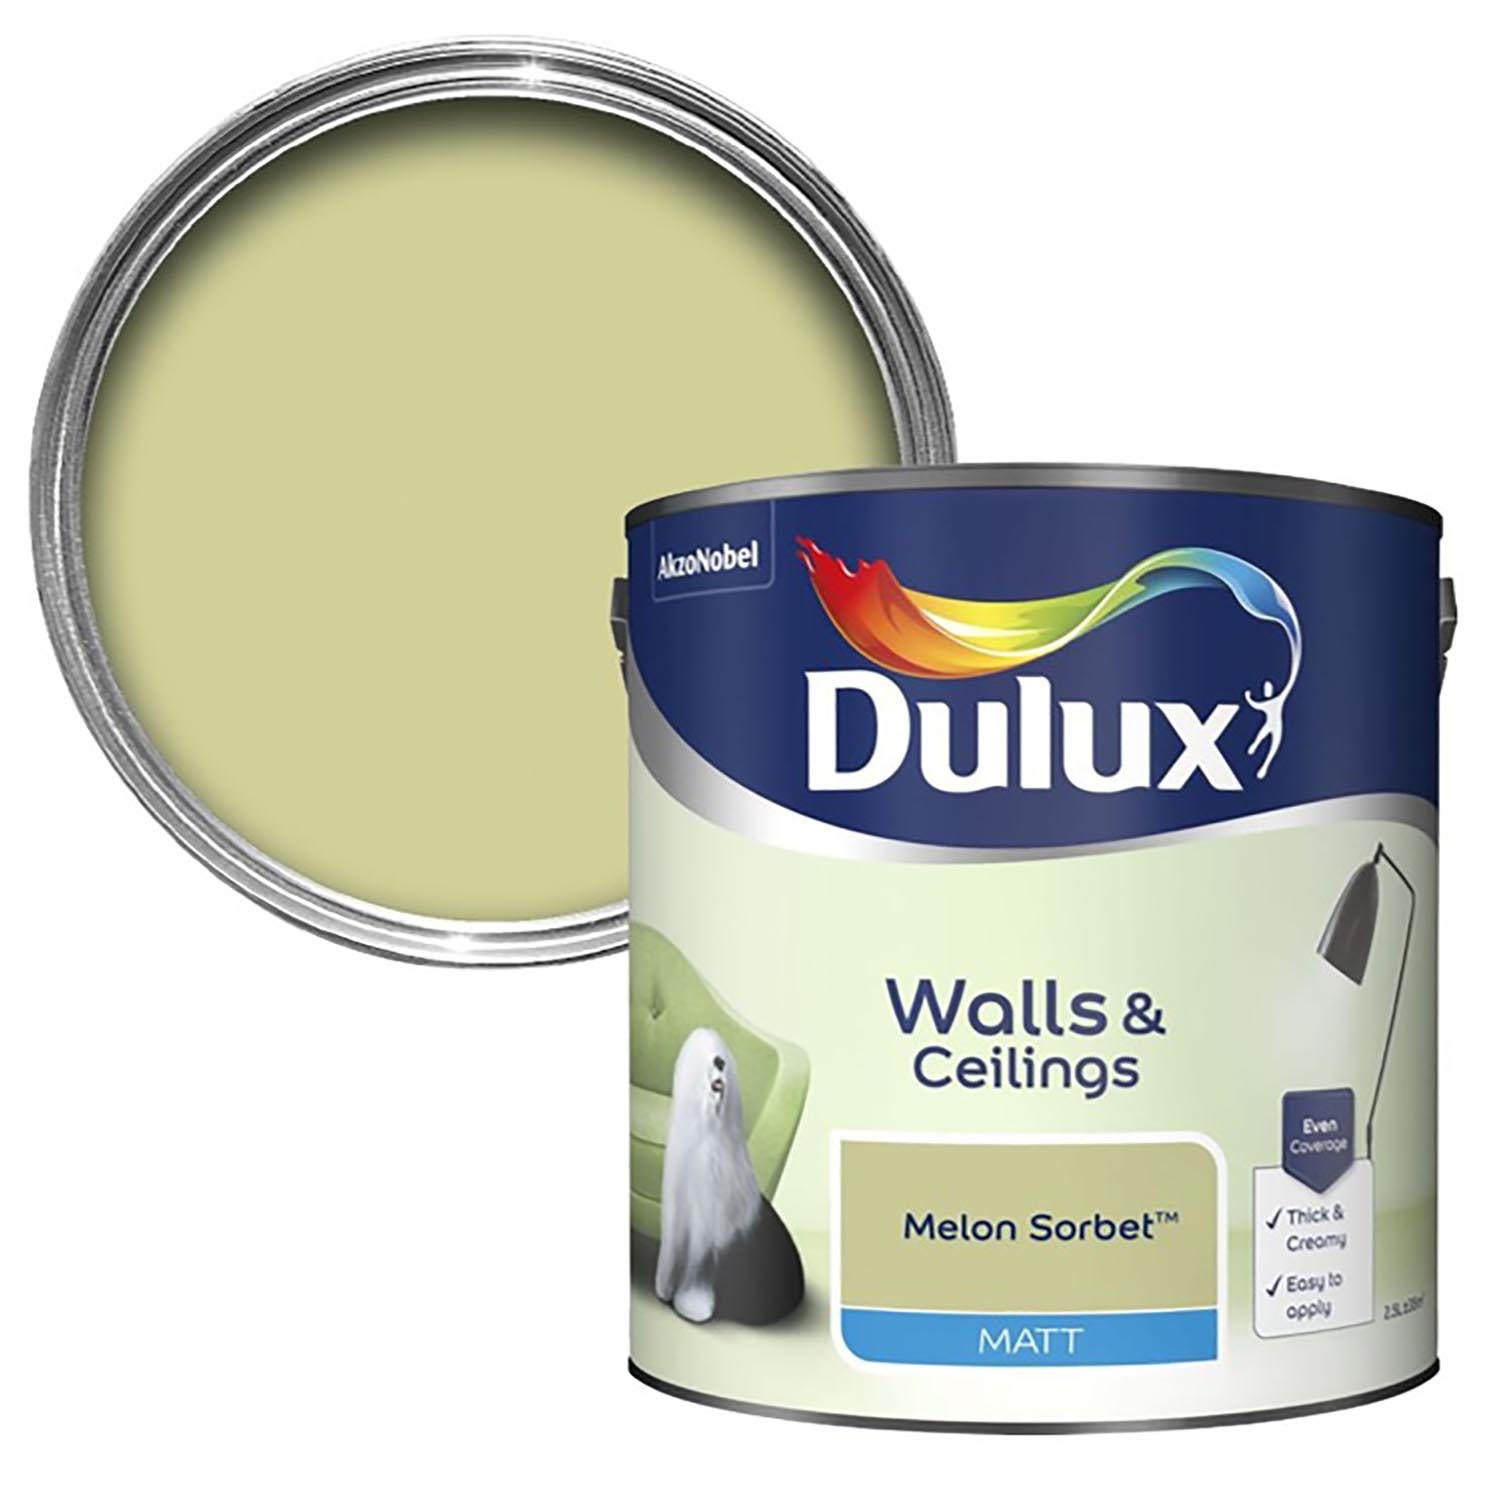 Dulux Walls and Ceilings Matt Paint  - Melon Sorbet Image 1